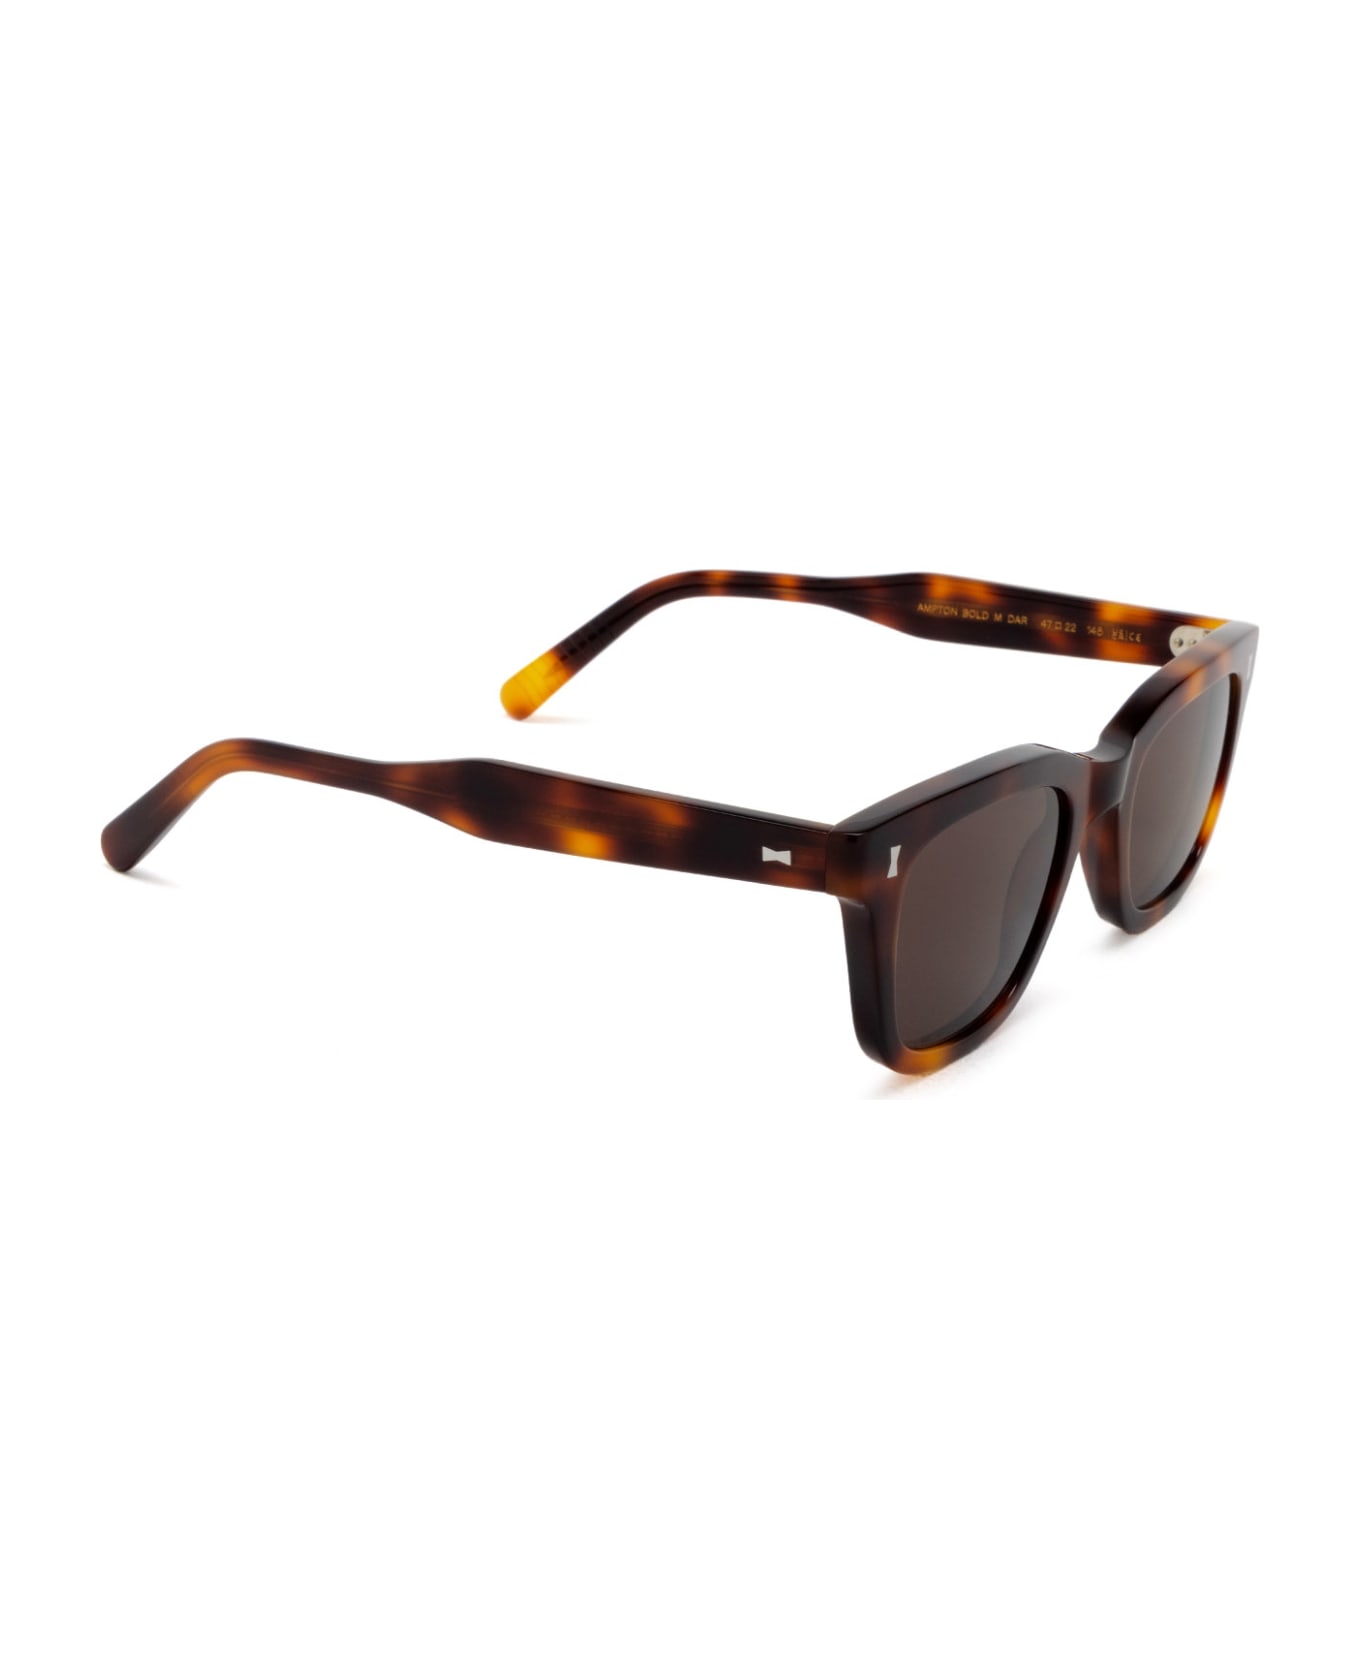 Cubitts Ampton Bold Sun Dark Turtle Sunglasses - Dark Turtle サングラス